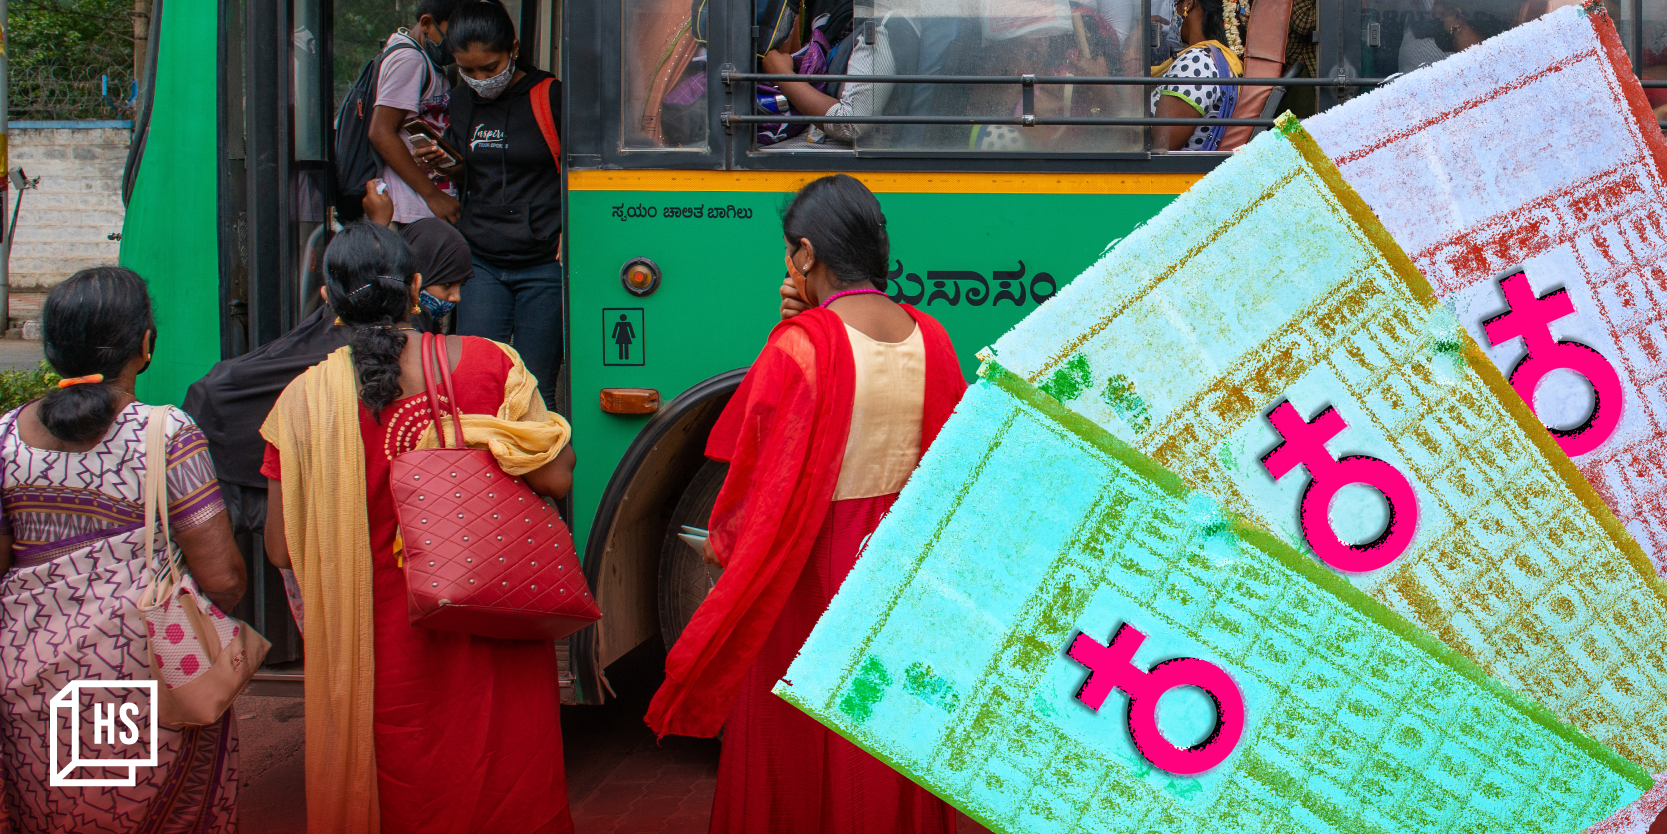 Karnataka Shakti Scheme: Free bus initiative transforms women's mobility, sparks mixed reactions

